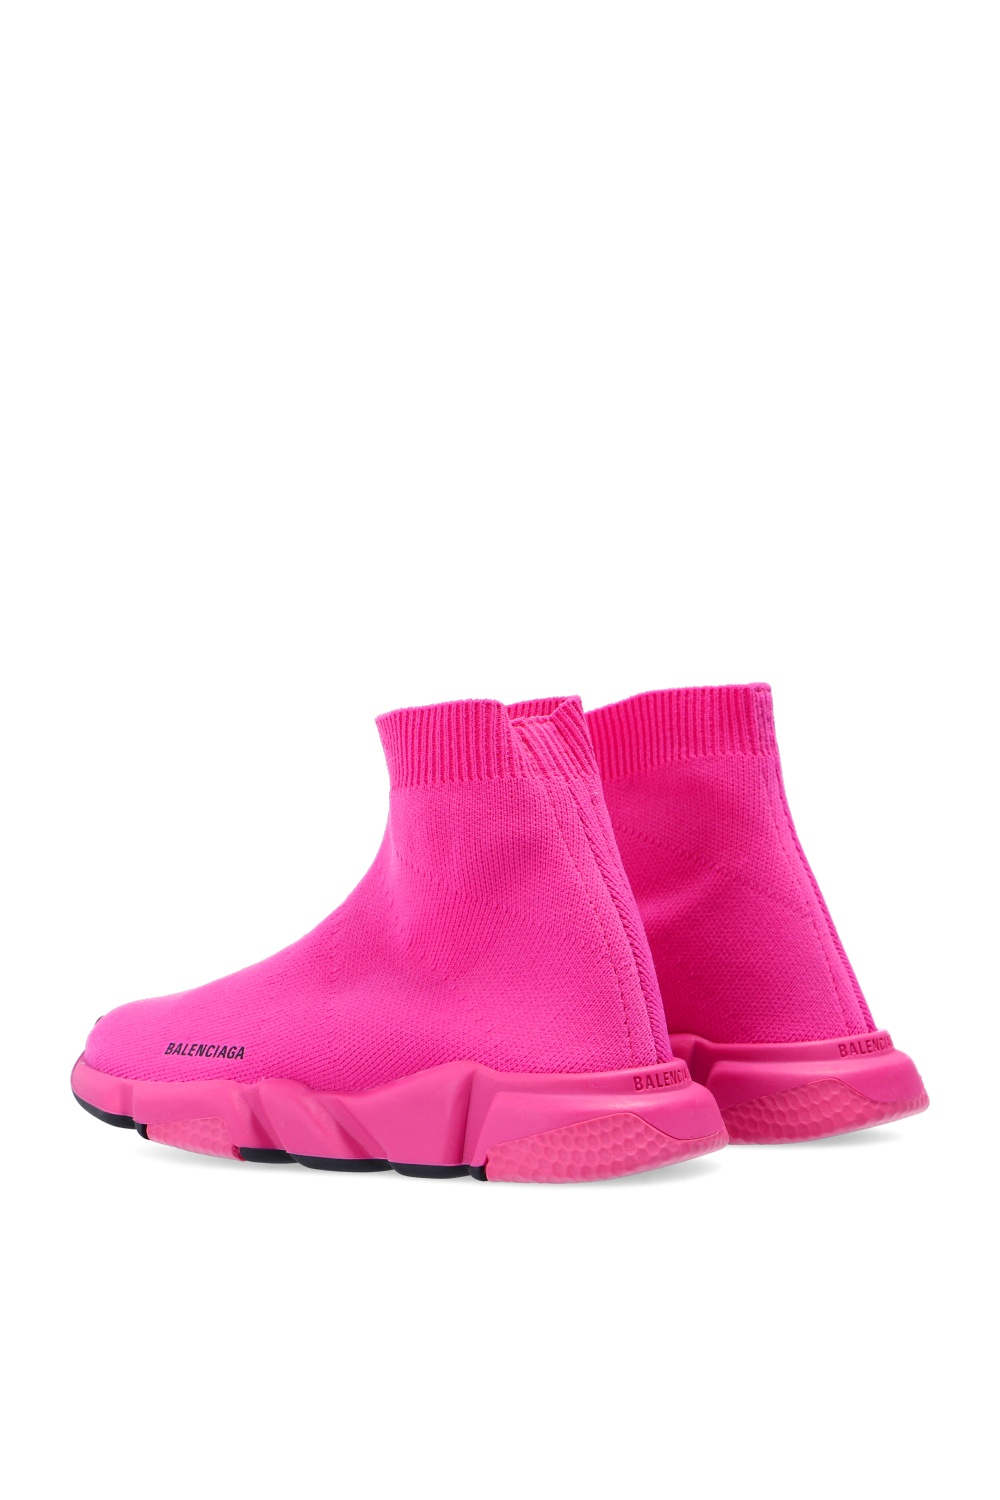 BALENCIAGA Speed LT sock trainers  Pink  Balenciaga shoes 597425W2DBJ  online on GIGLIOCOM